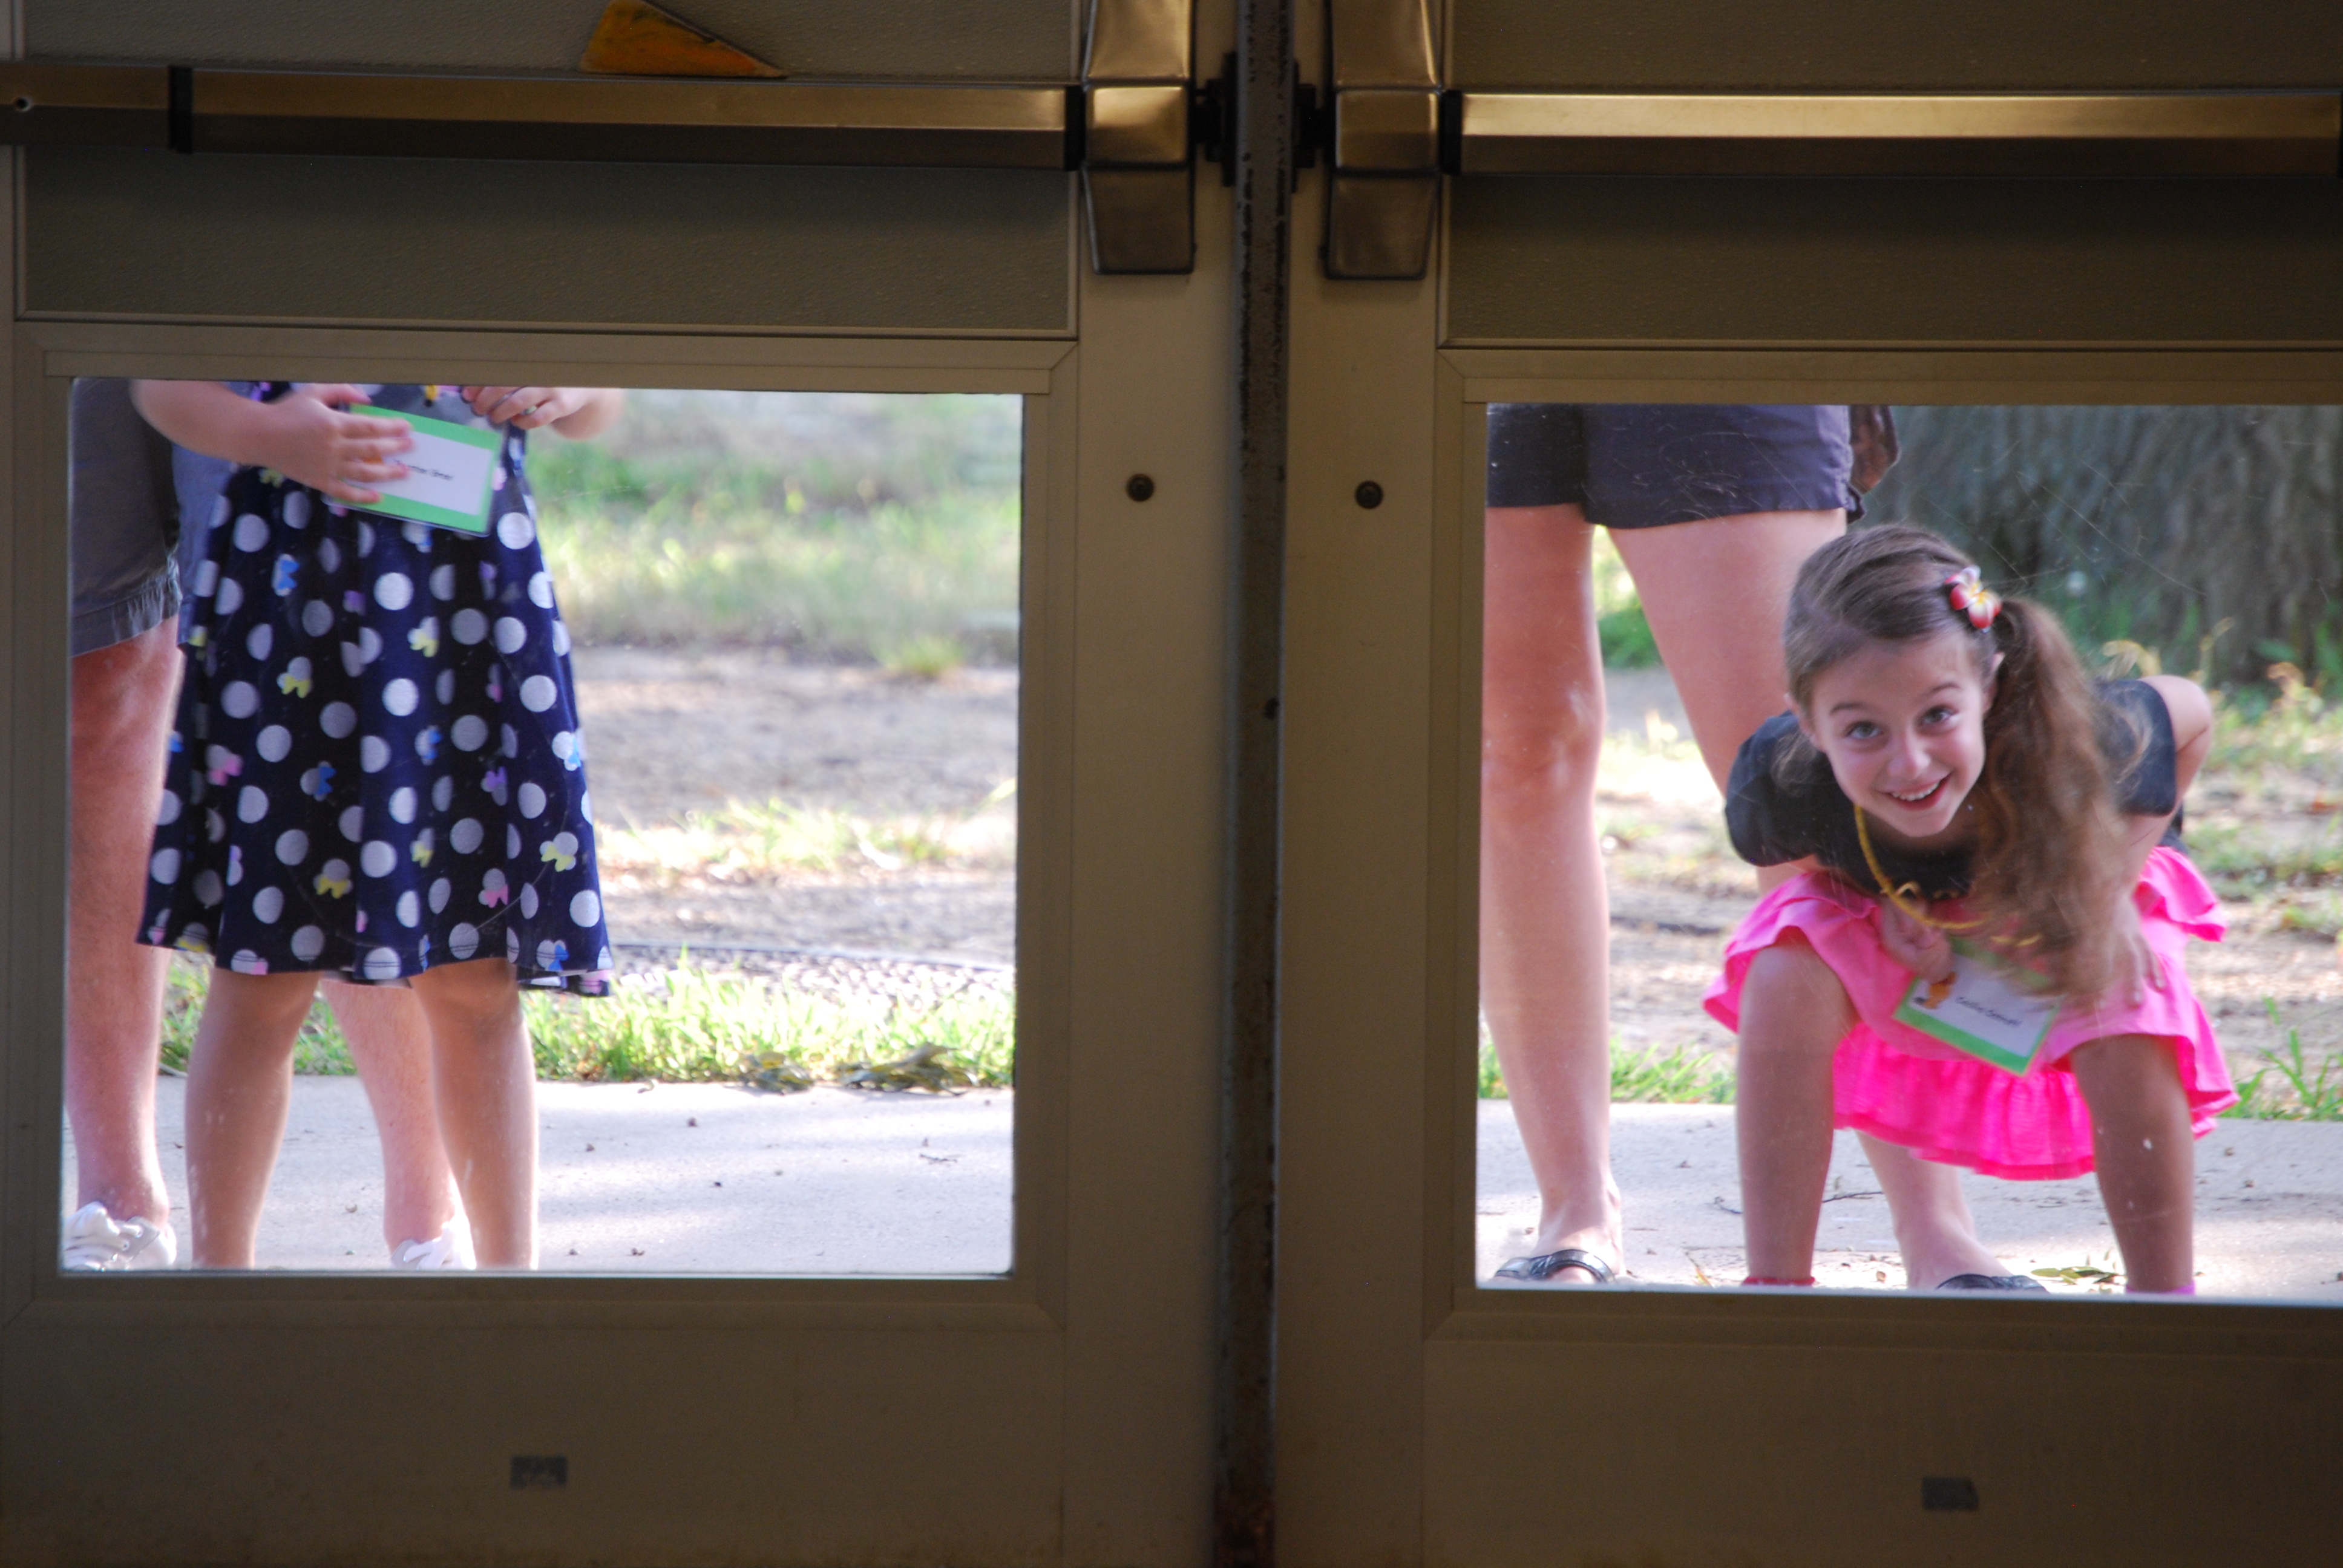 students peeking in through doors of closed school building